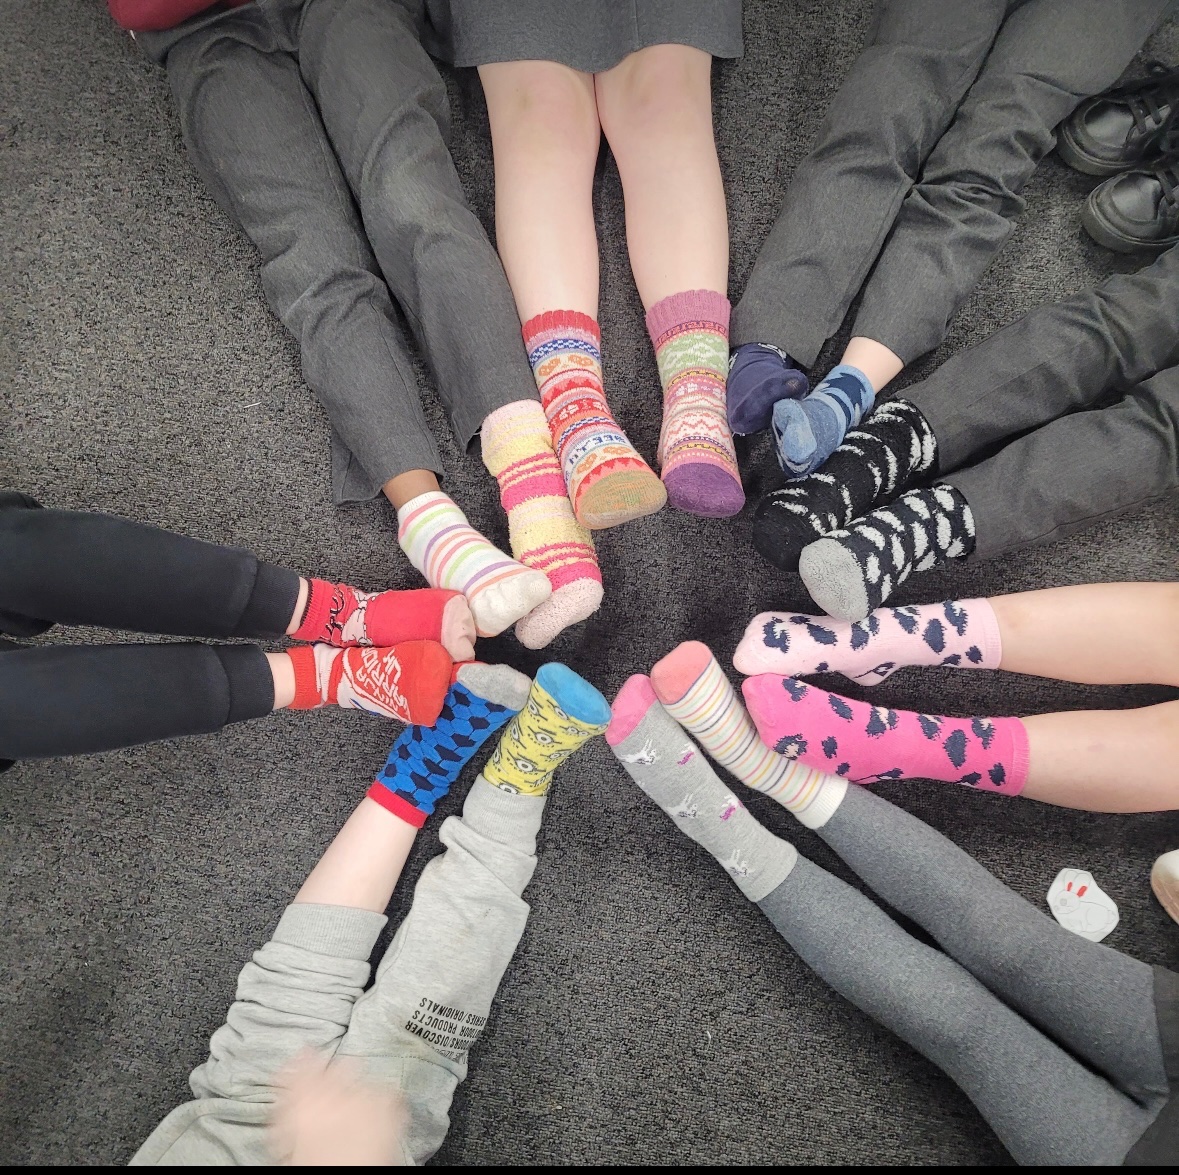 Dosbarth Elm have worn odd socks to celebrate world down syndrome day!